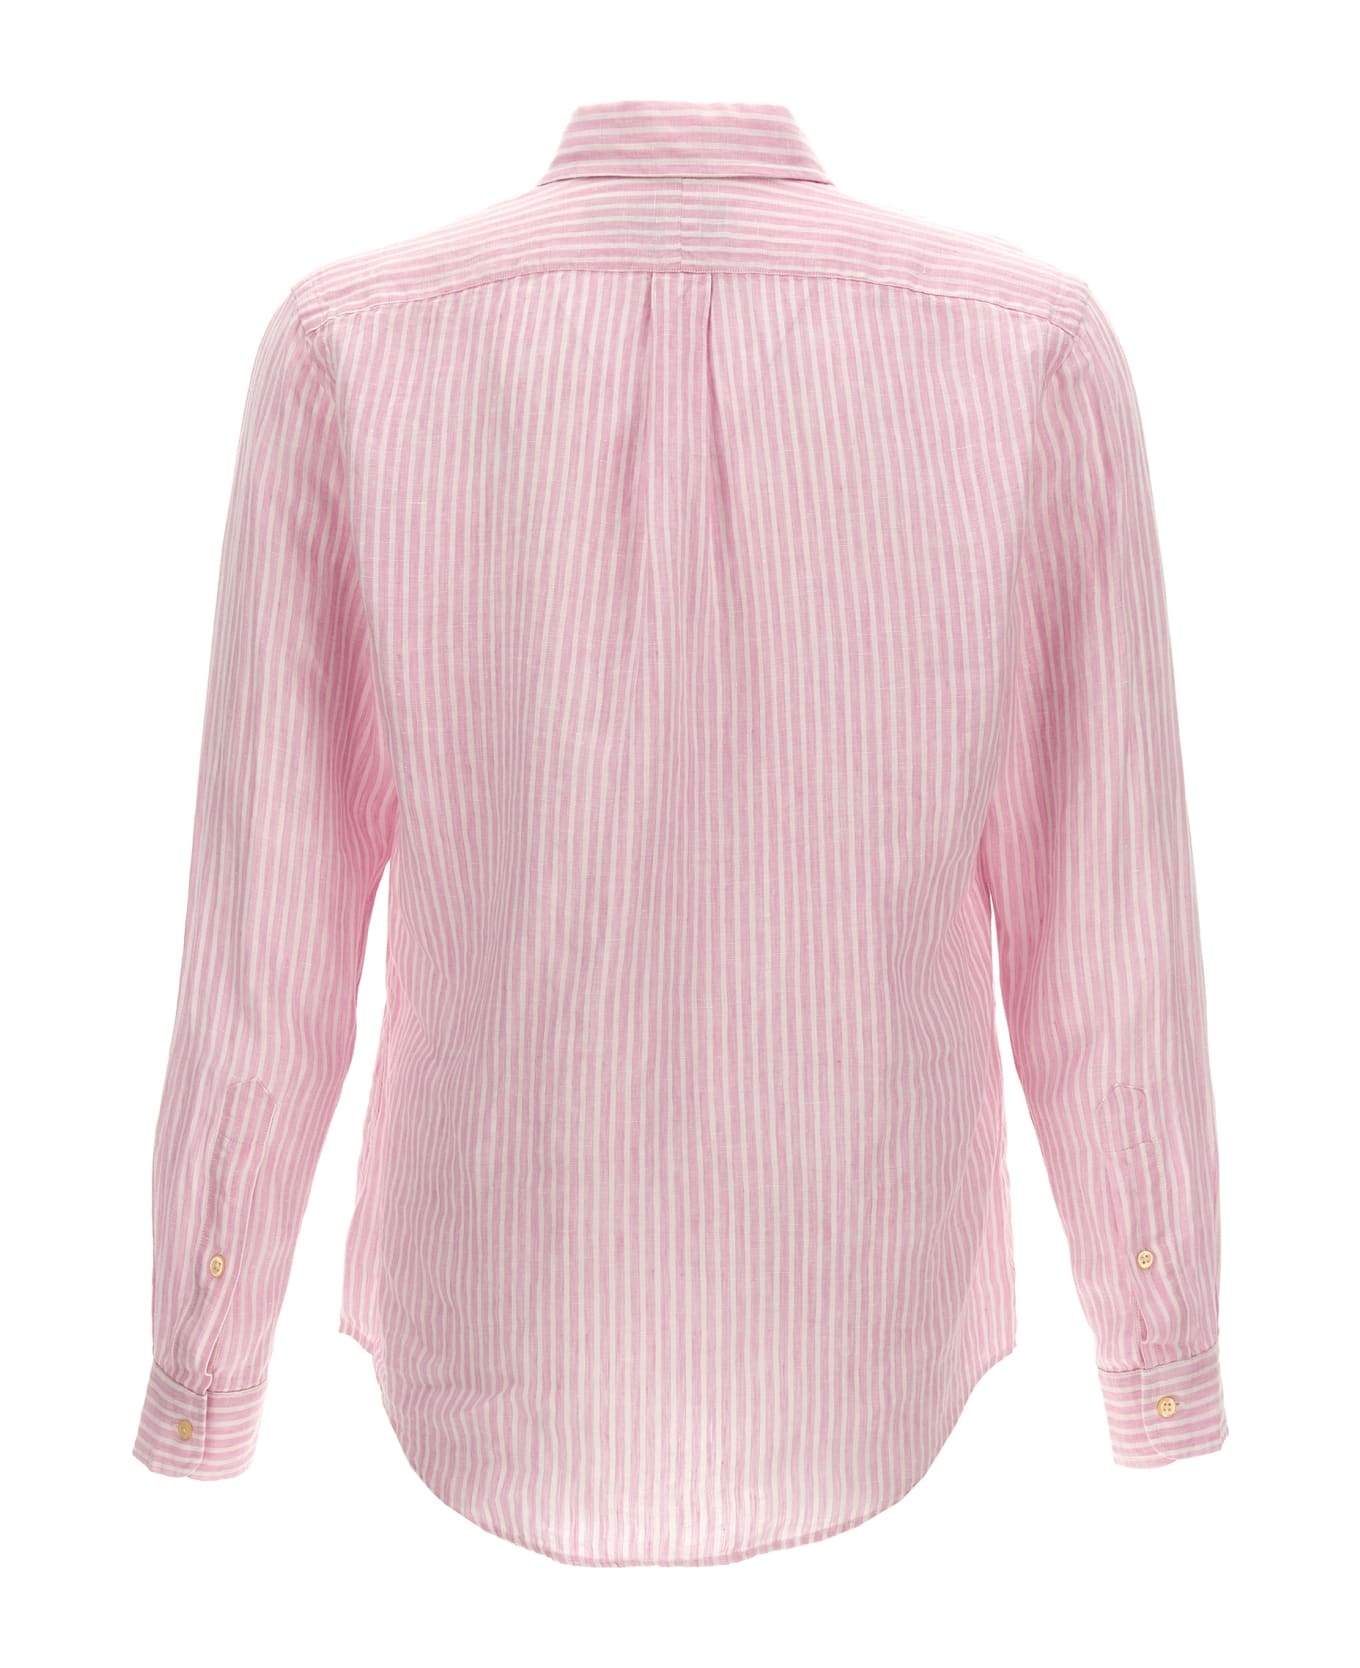 Polo Ralph Lauren Striped Linen Shirt - PINKWHITE